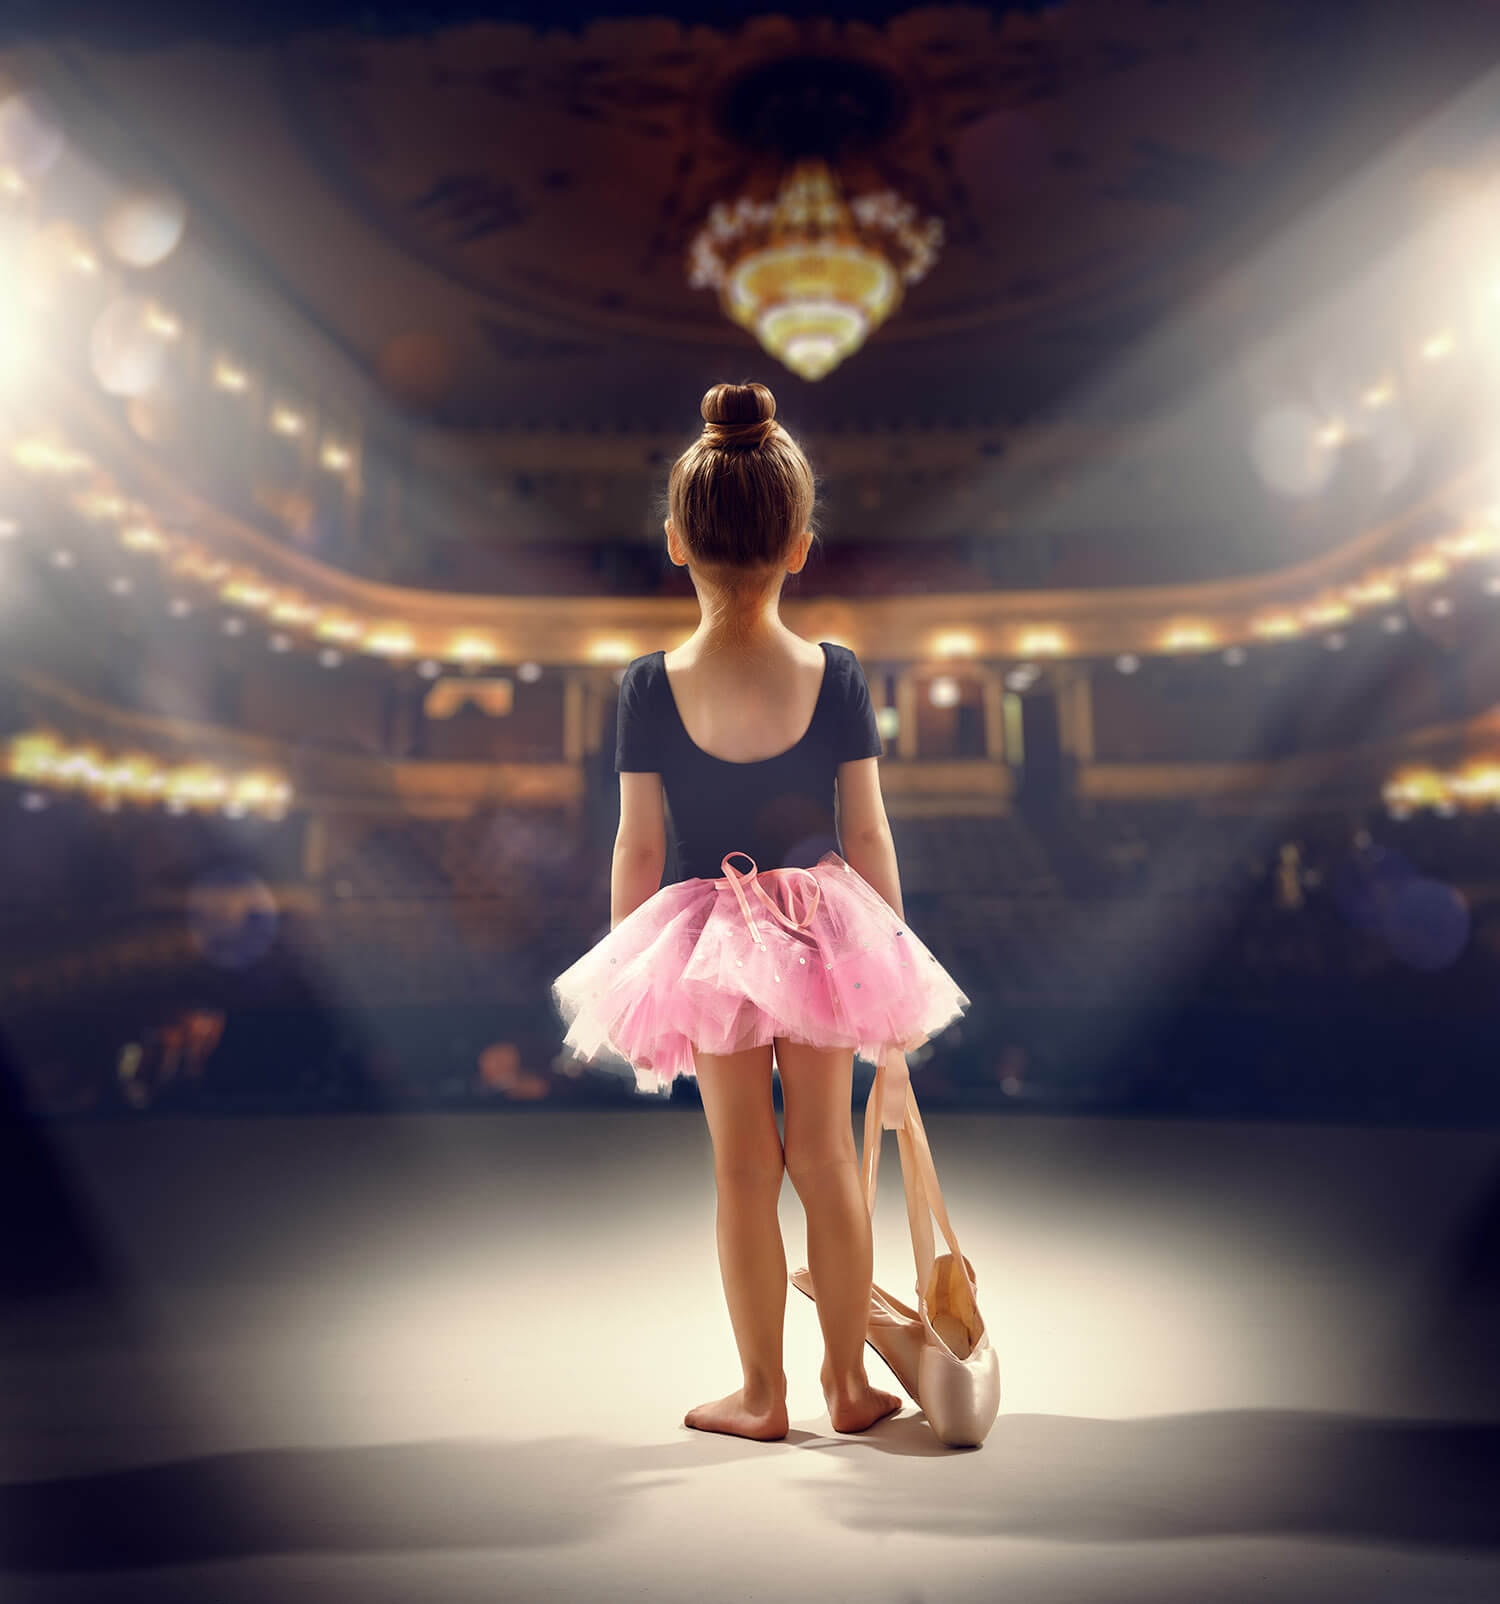 Classical Ballet Academies – Choosing A Ballet Academy